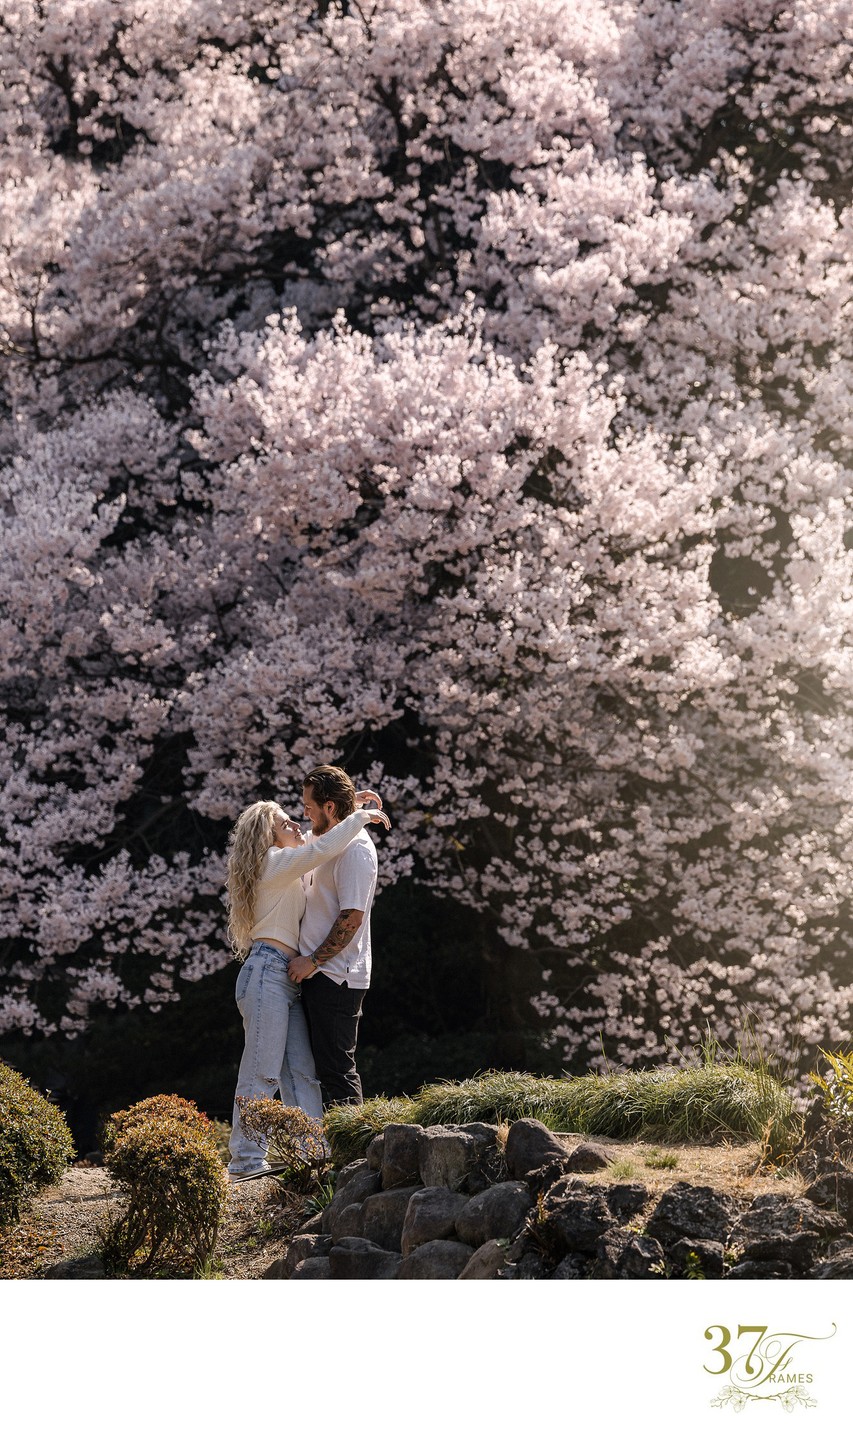 Unforgettable Cherry Blossom Engagement Photos in Tokyo